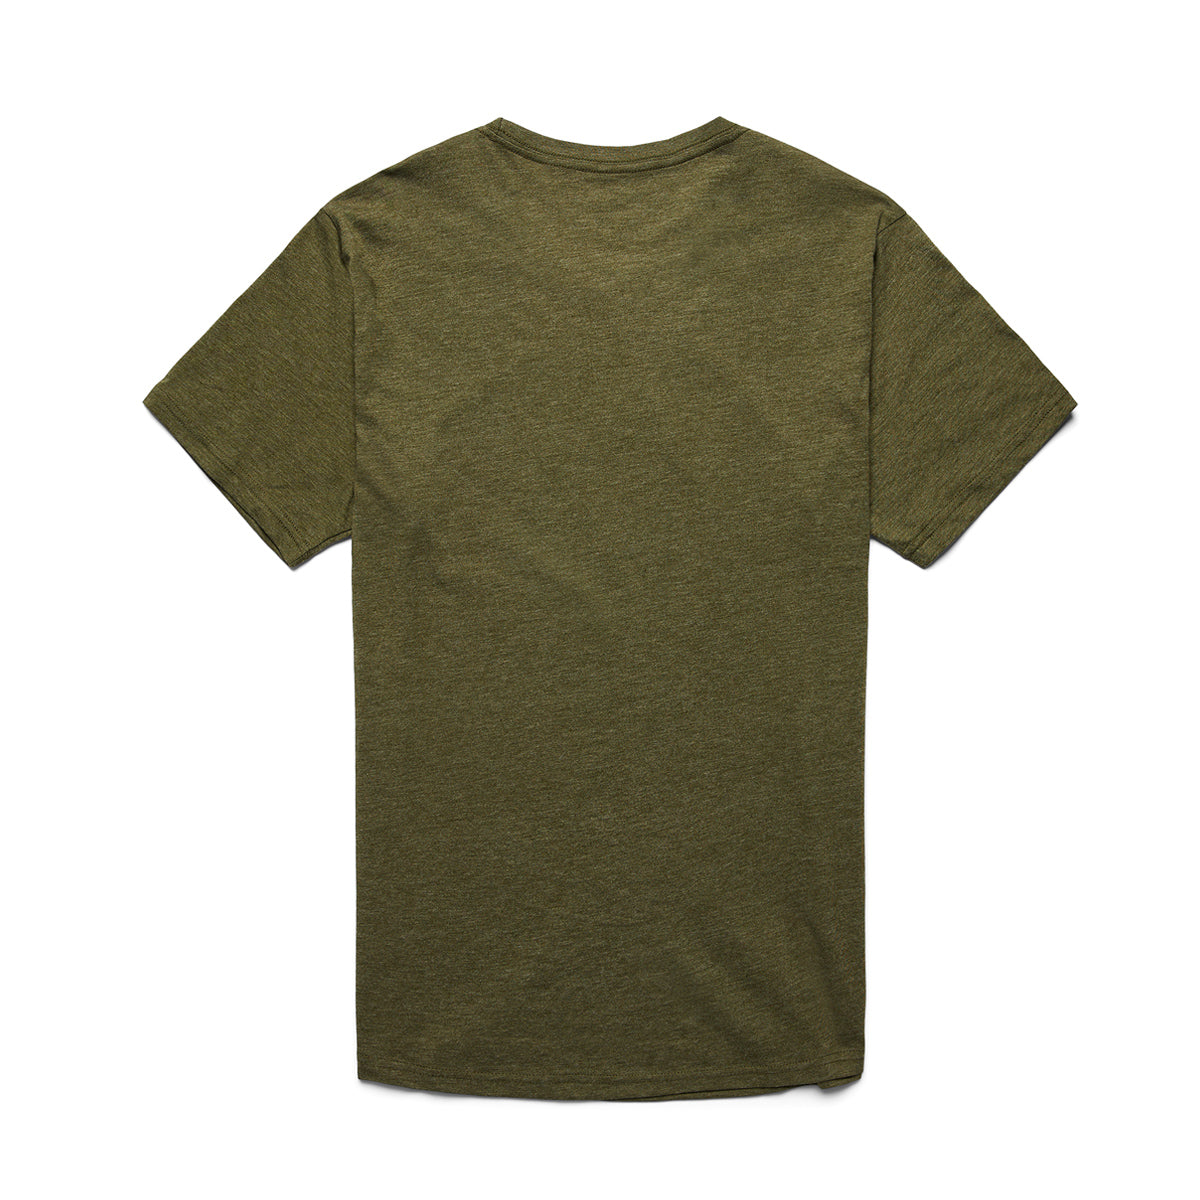 Cotopaxi Vibe Organic T-Shirt - MENS